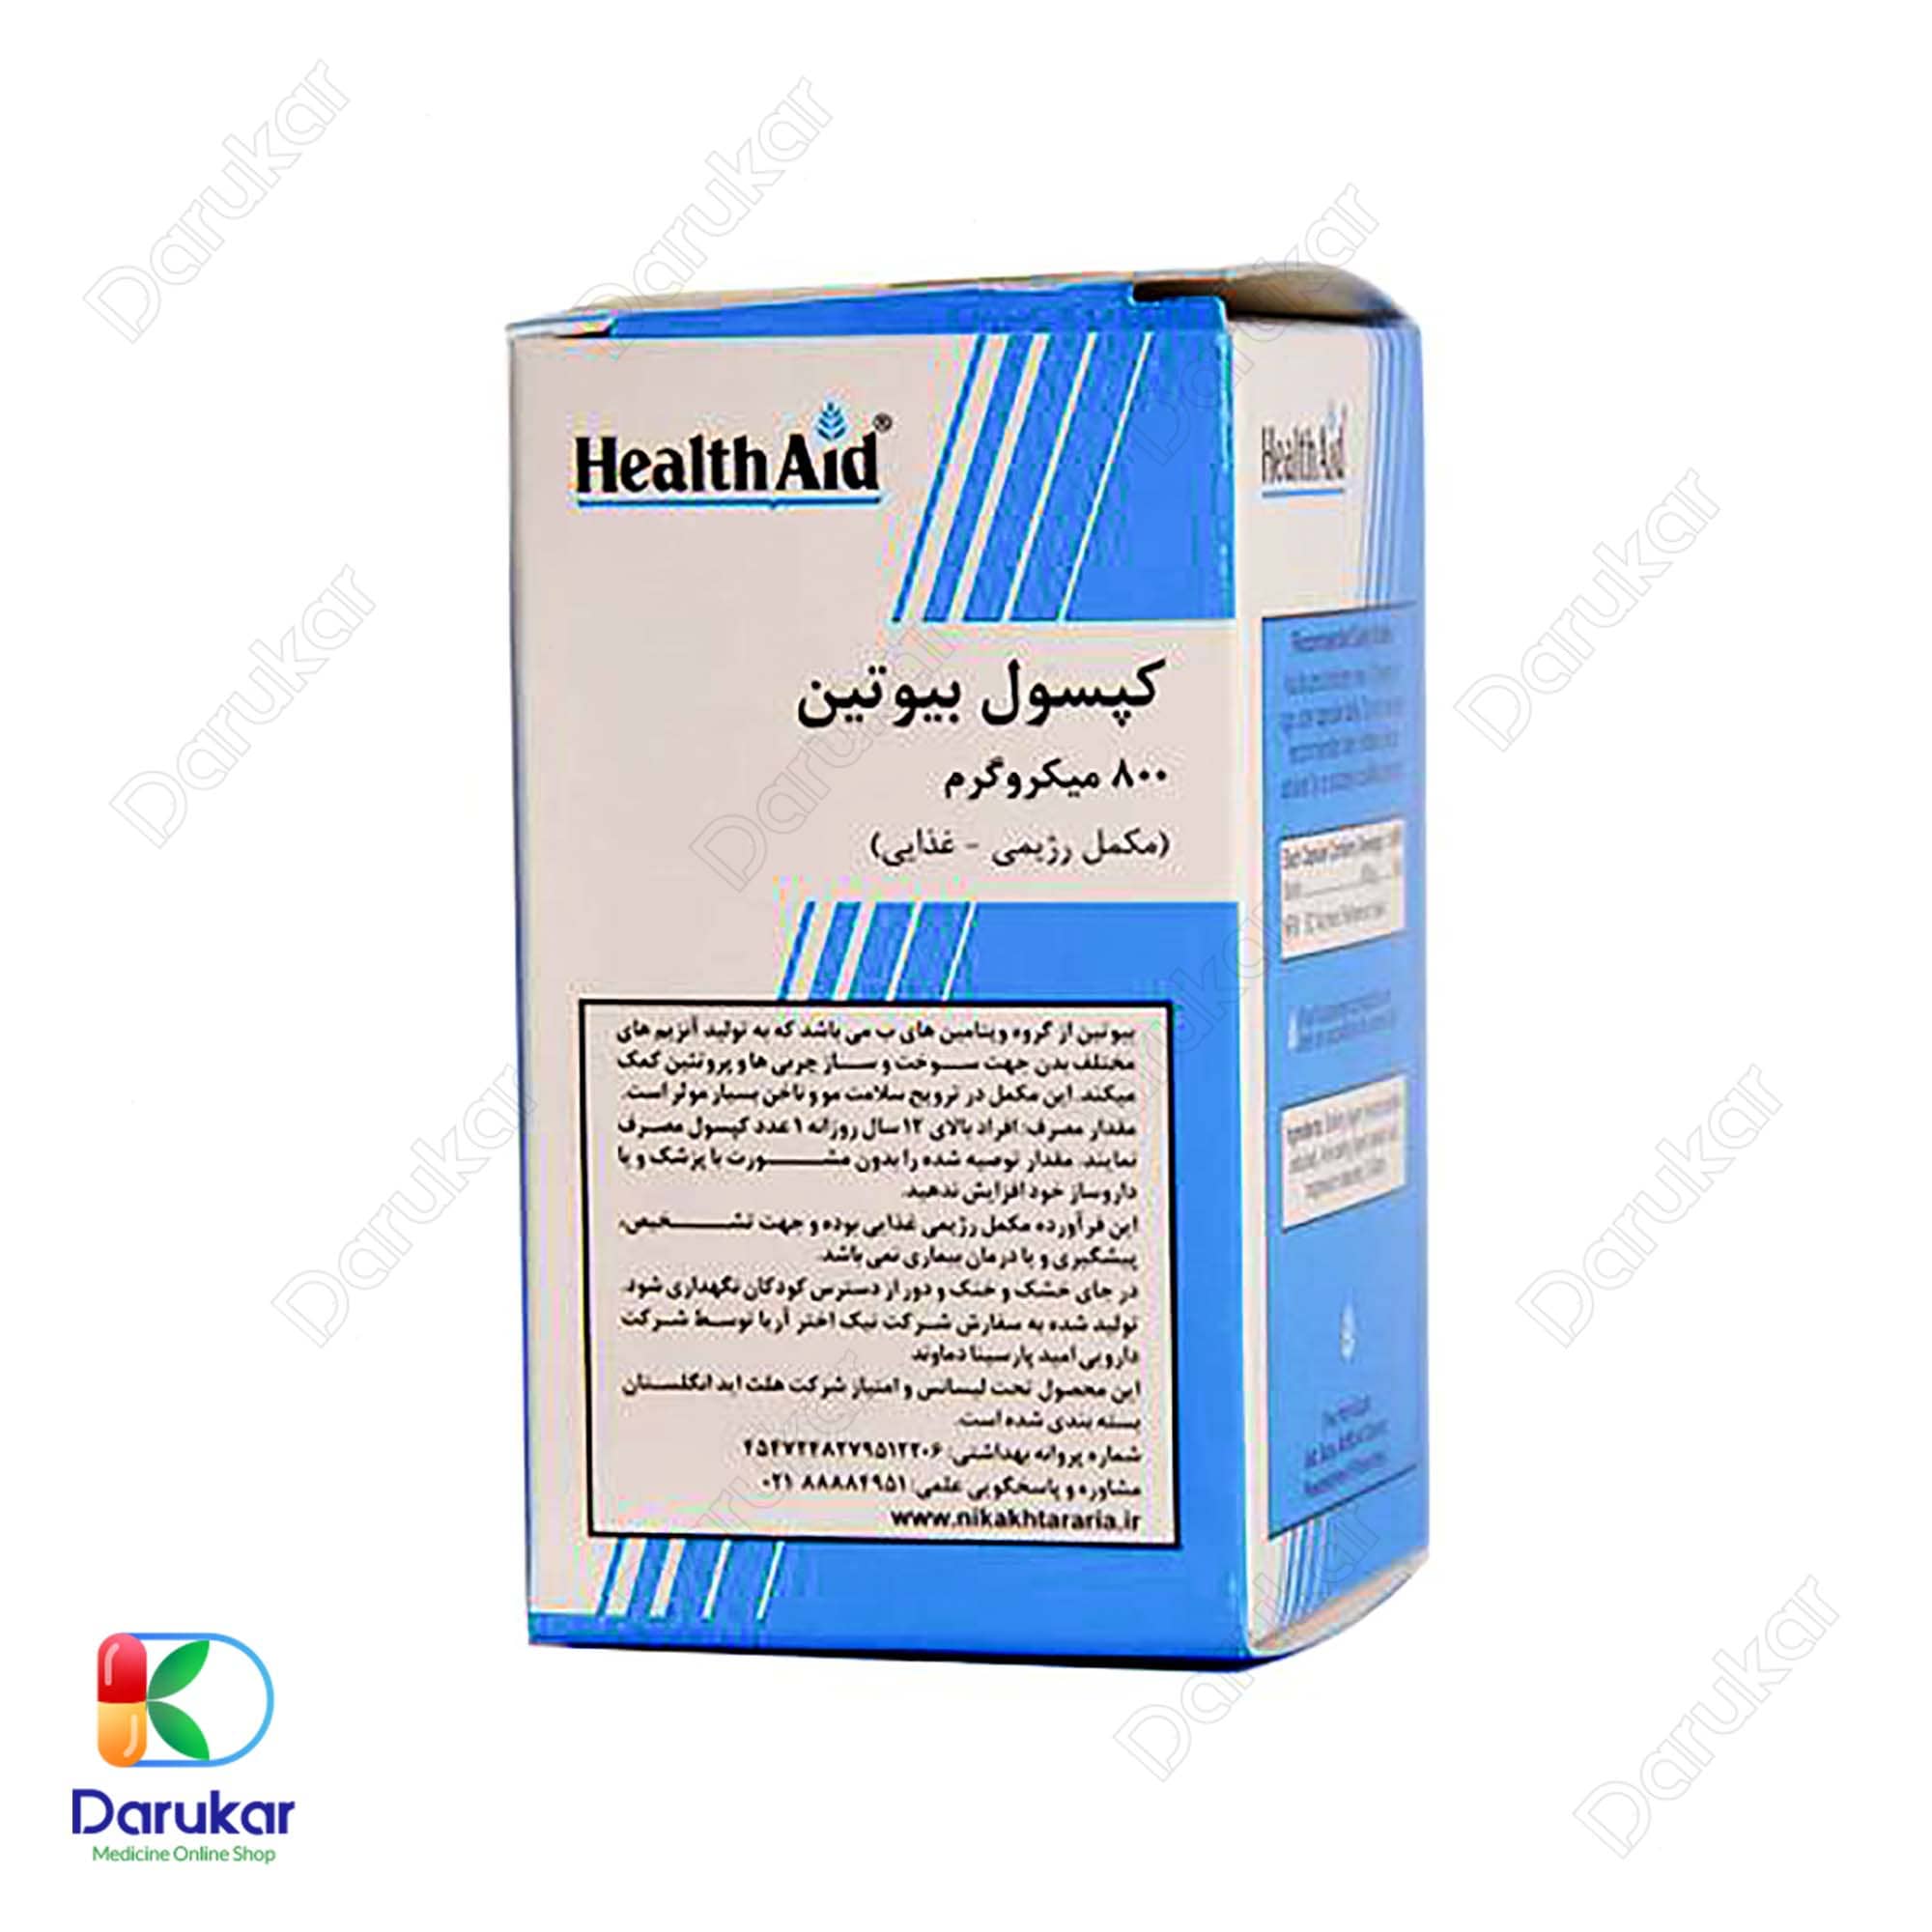 Health Aid Biotin 800 mcg 30 Tabs Image Gallery3